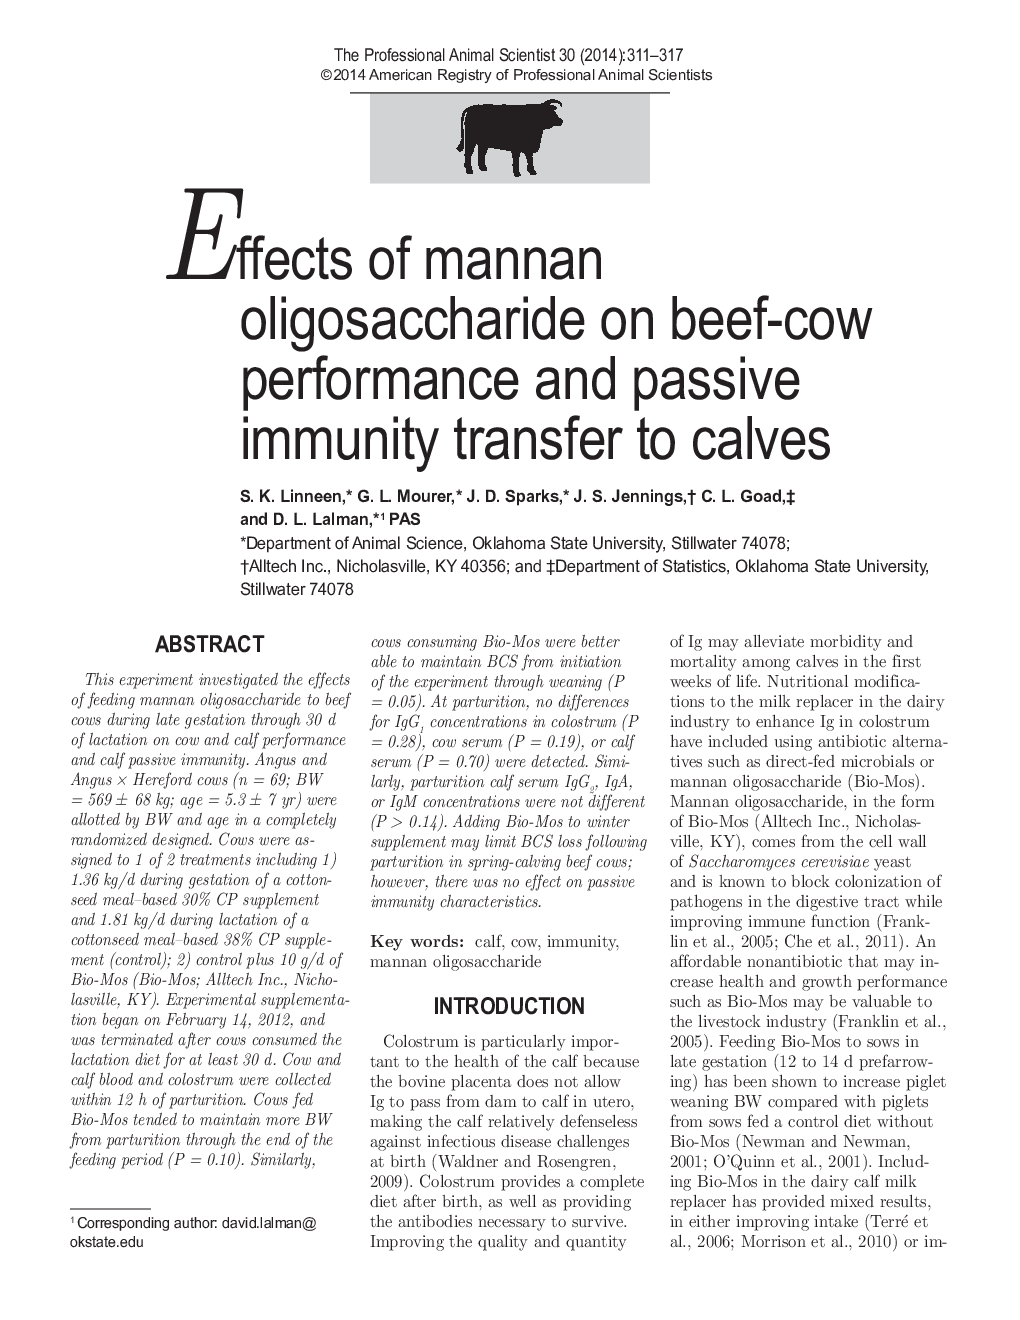 اثر الیگوساکارید مانان بر عملکرد گوساله و انتقال ایمنی به گوساله ها 